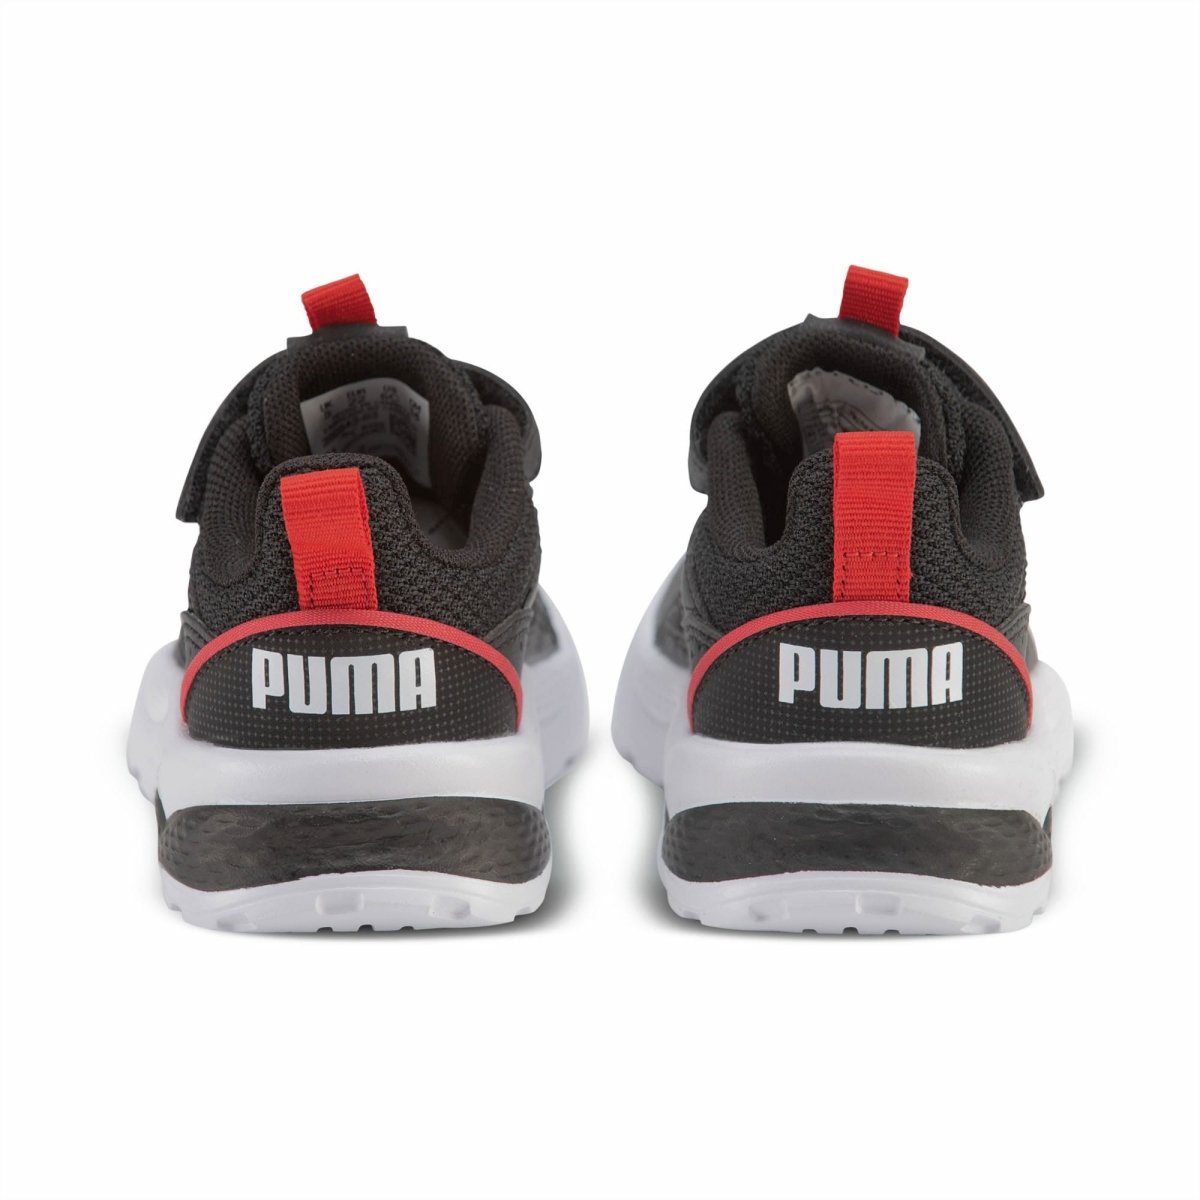 Puma PUMA INFANT'S ANZARUN BLACK/RED SHOES - INSPORT